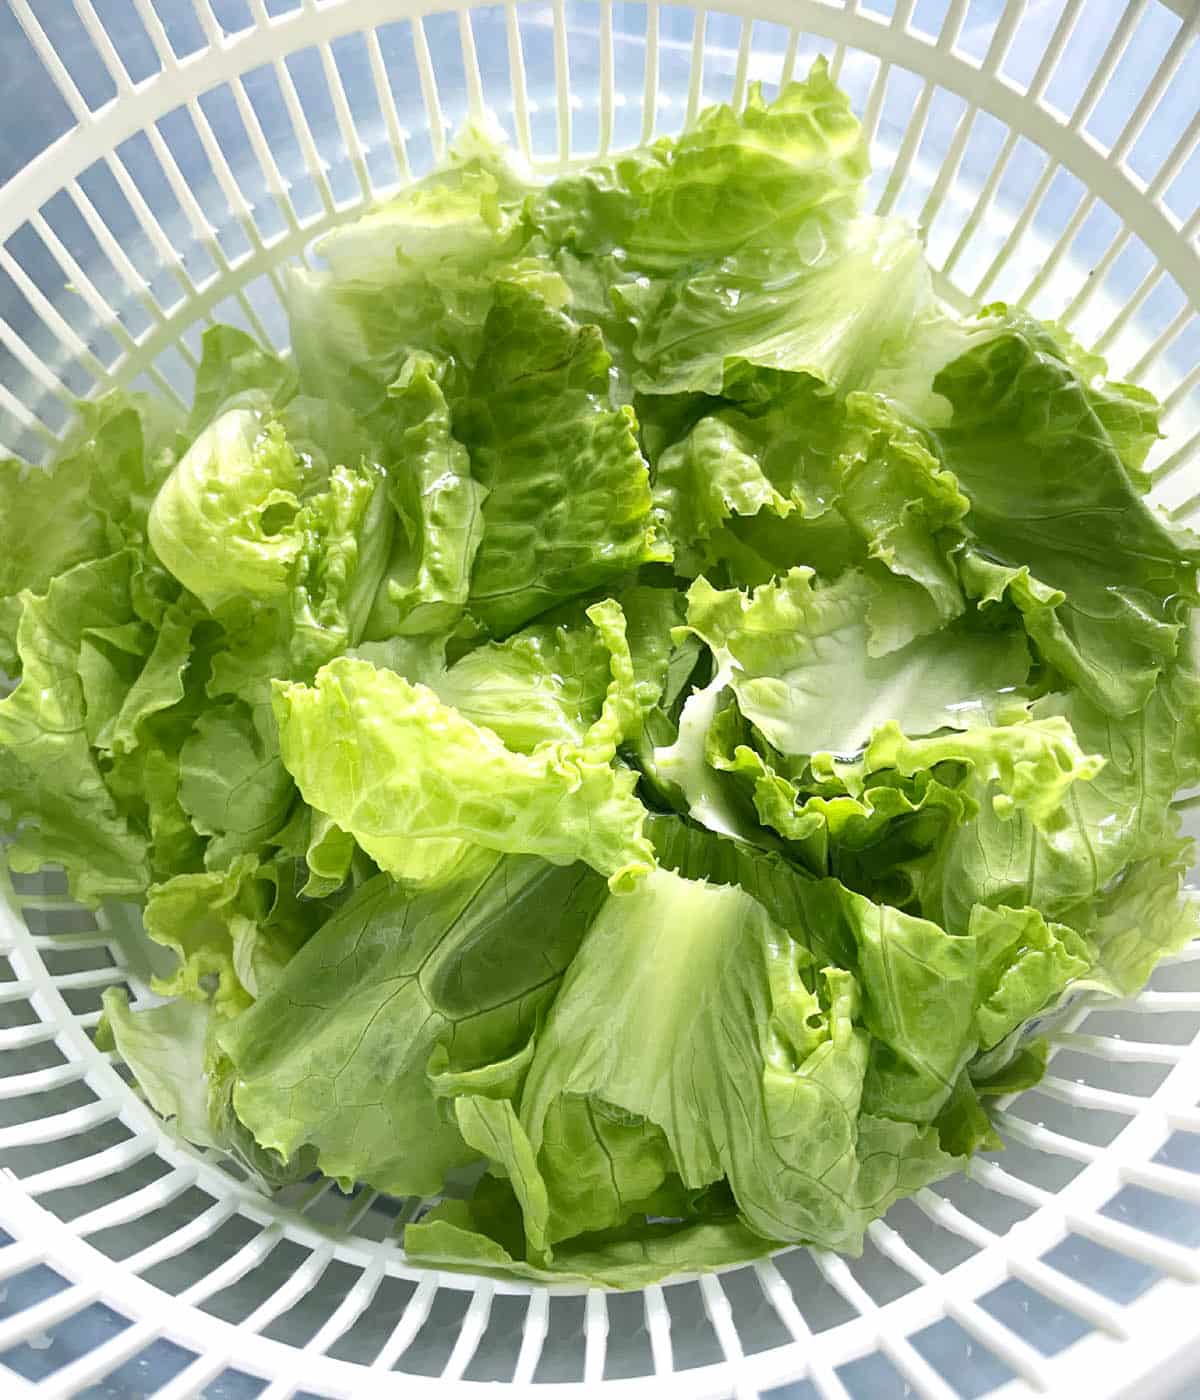 Green lettuce leaves in a white basket.